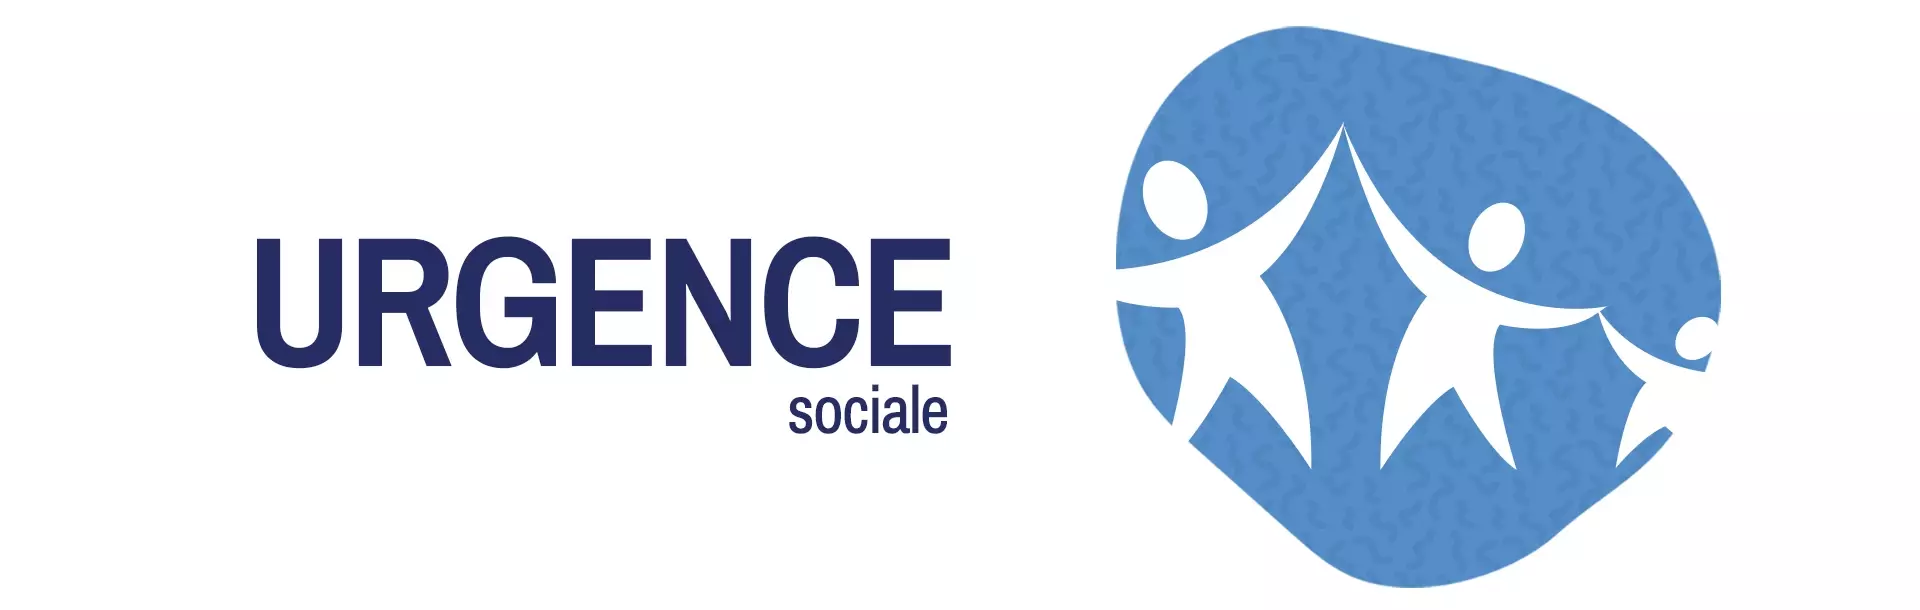 Urgence sociale dans le Cantal, Anef 15